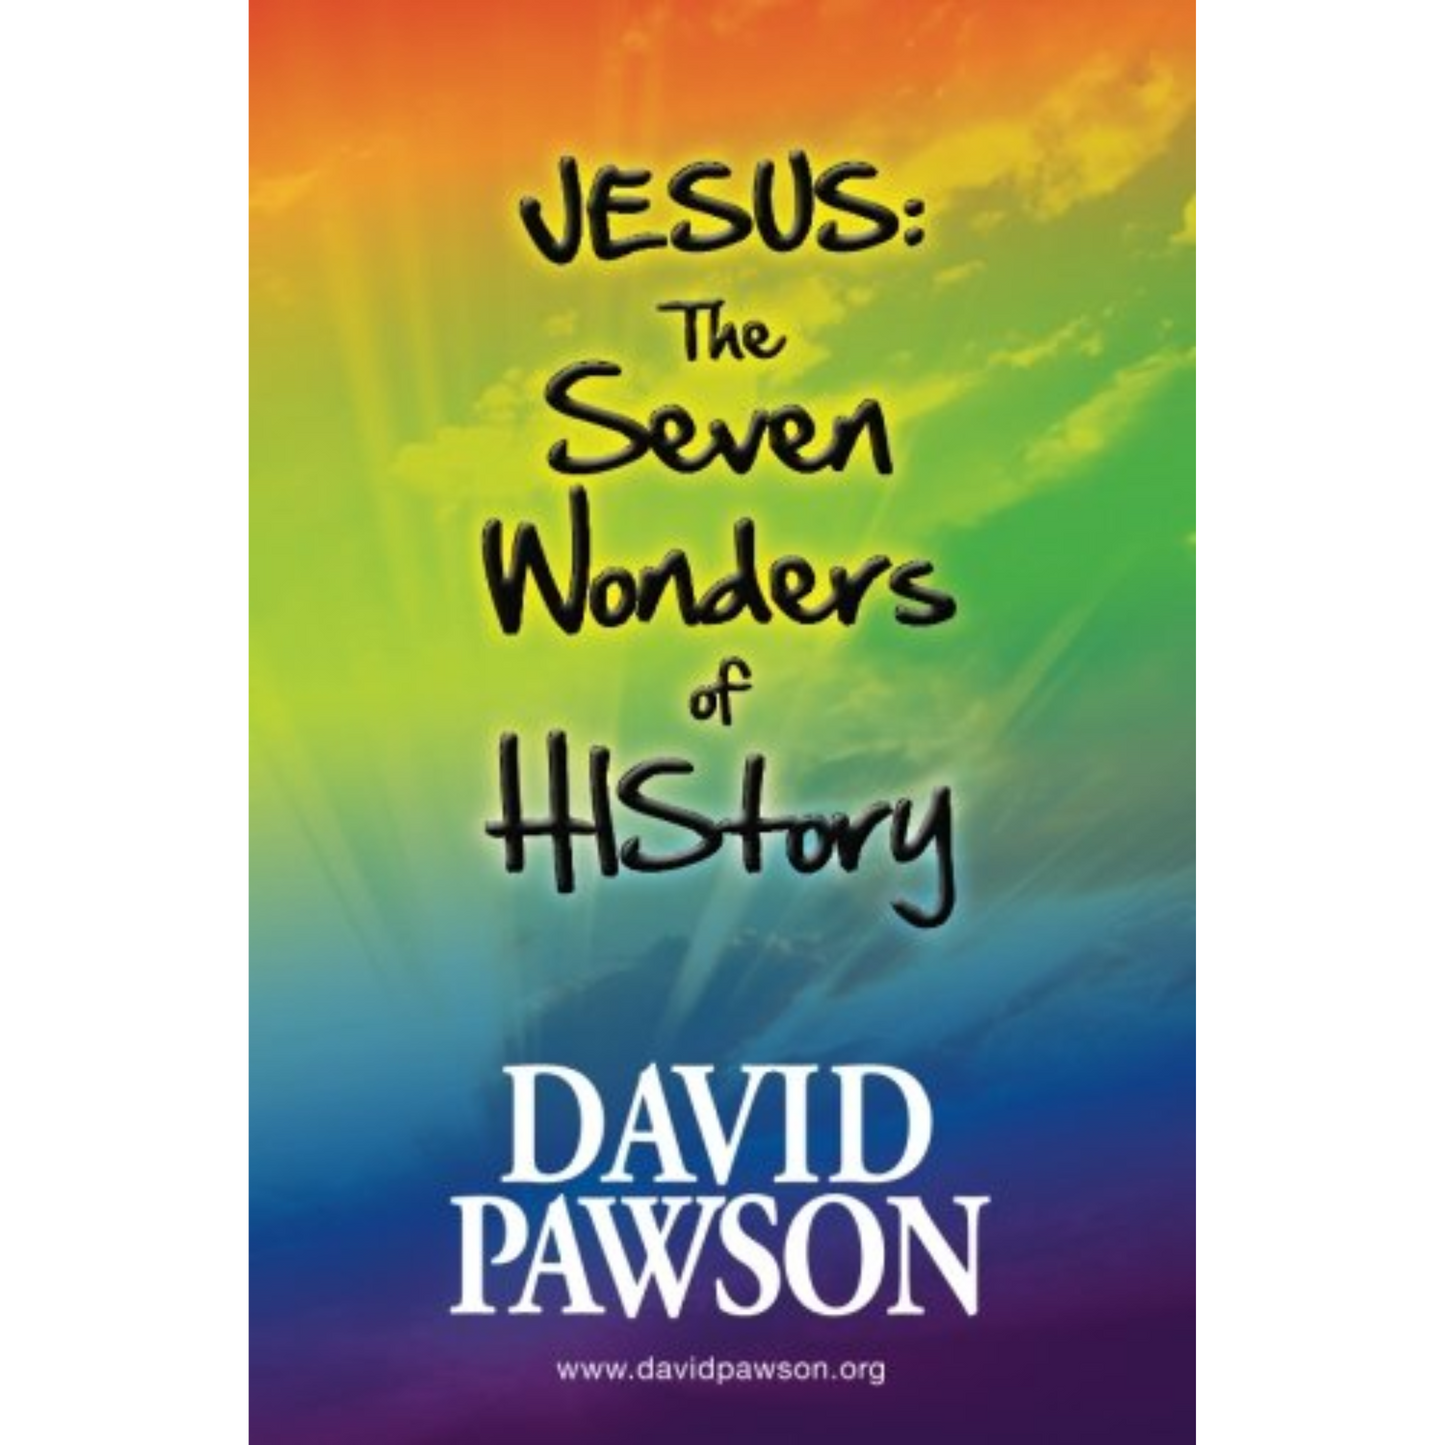 Jesus: The Seven Wonders Of HIStory